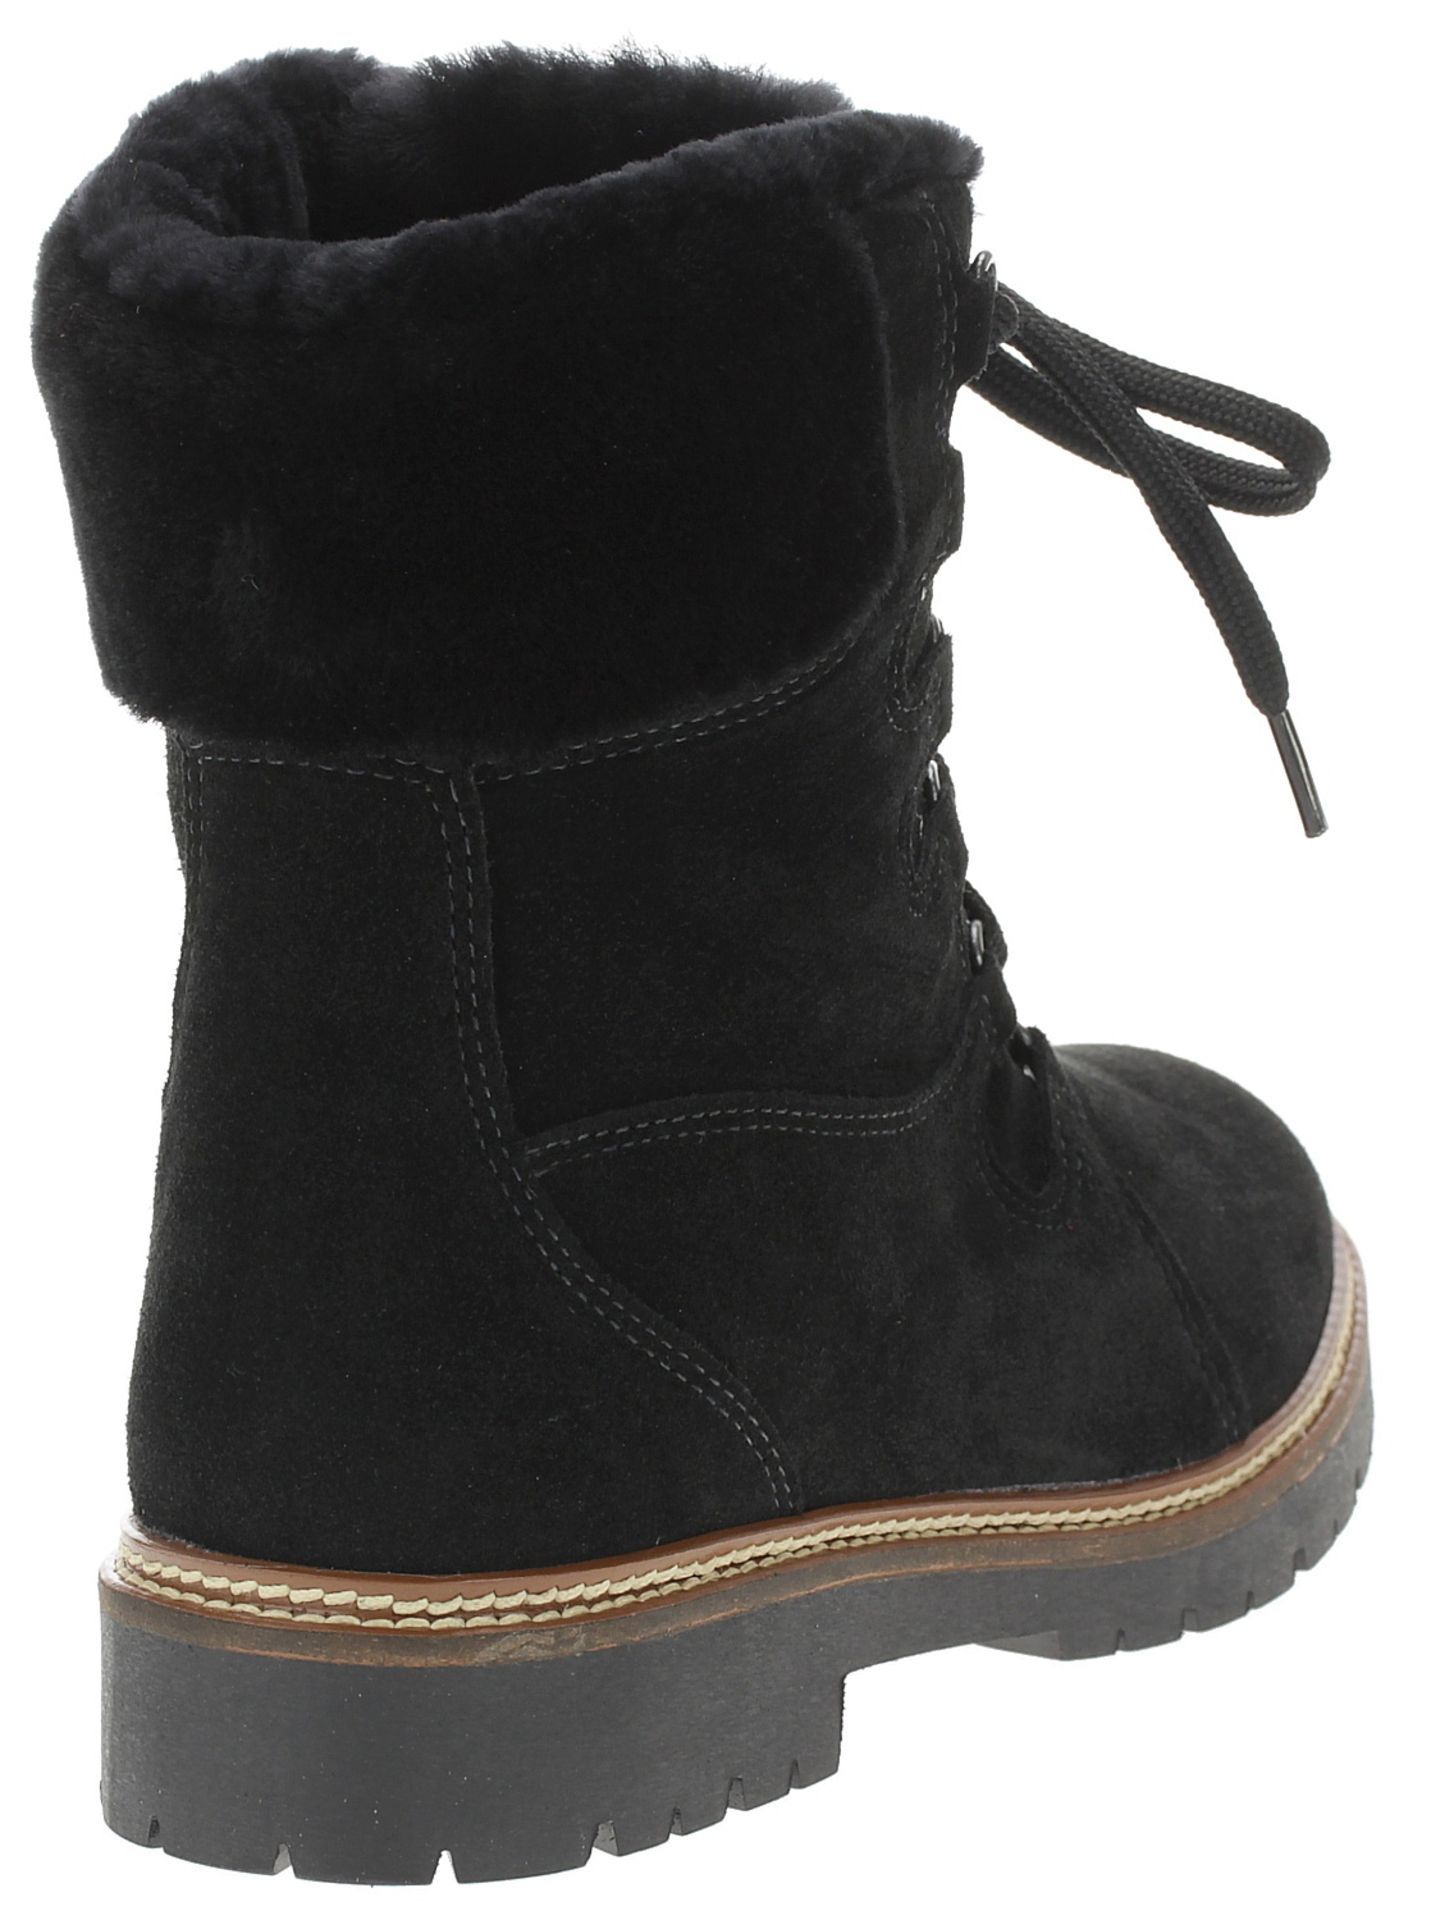 1 x Pair of Designer Olang Meribel 81 Nero Women's Winter Boots - Euro Size 41 - Brand New Boxed - Image 2 of 5